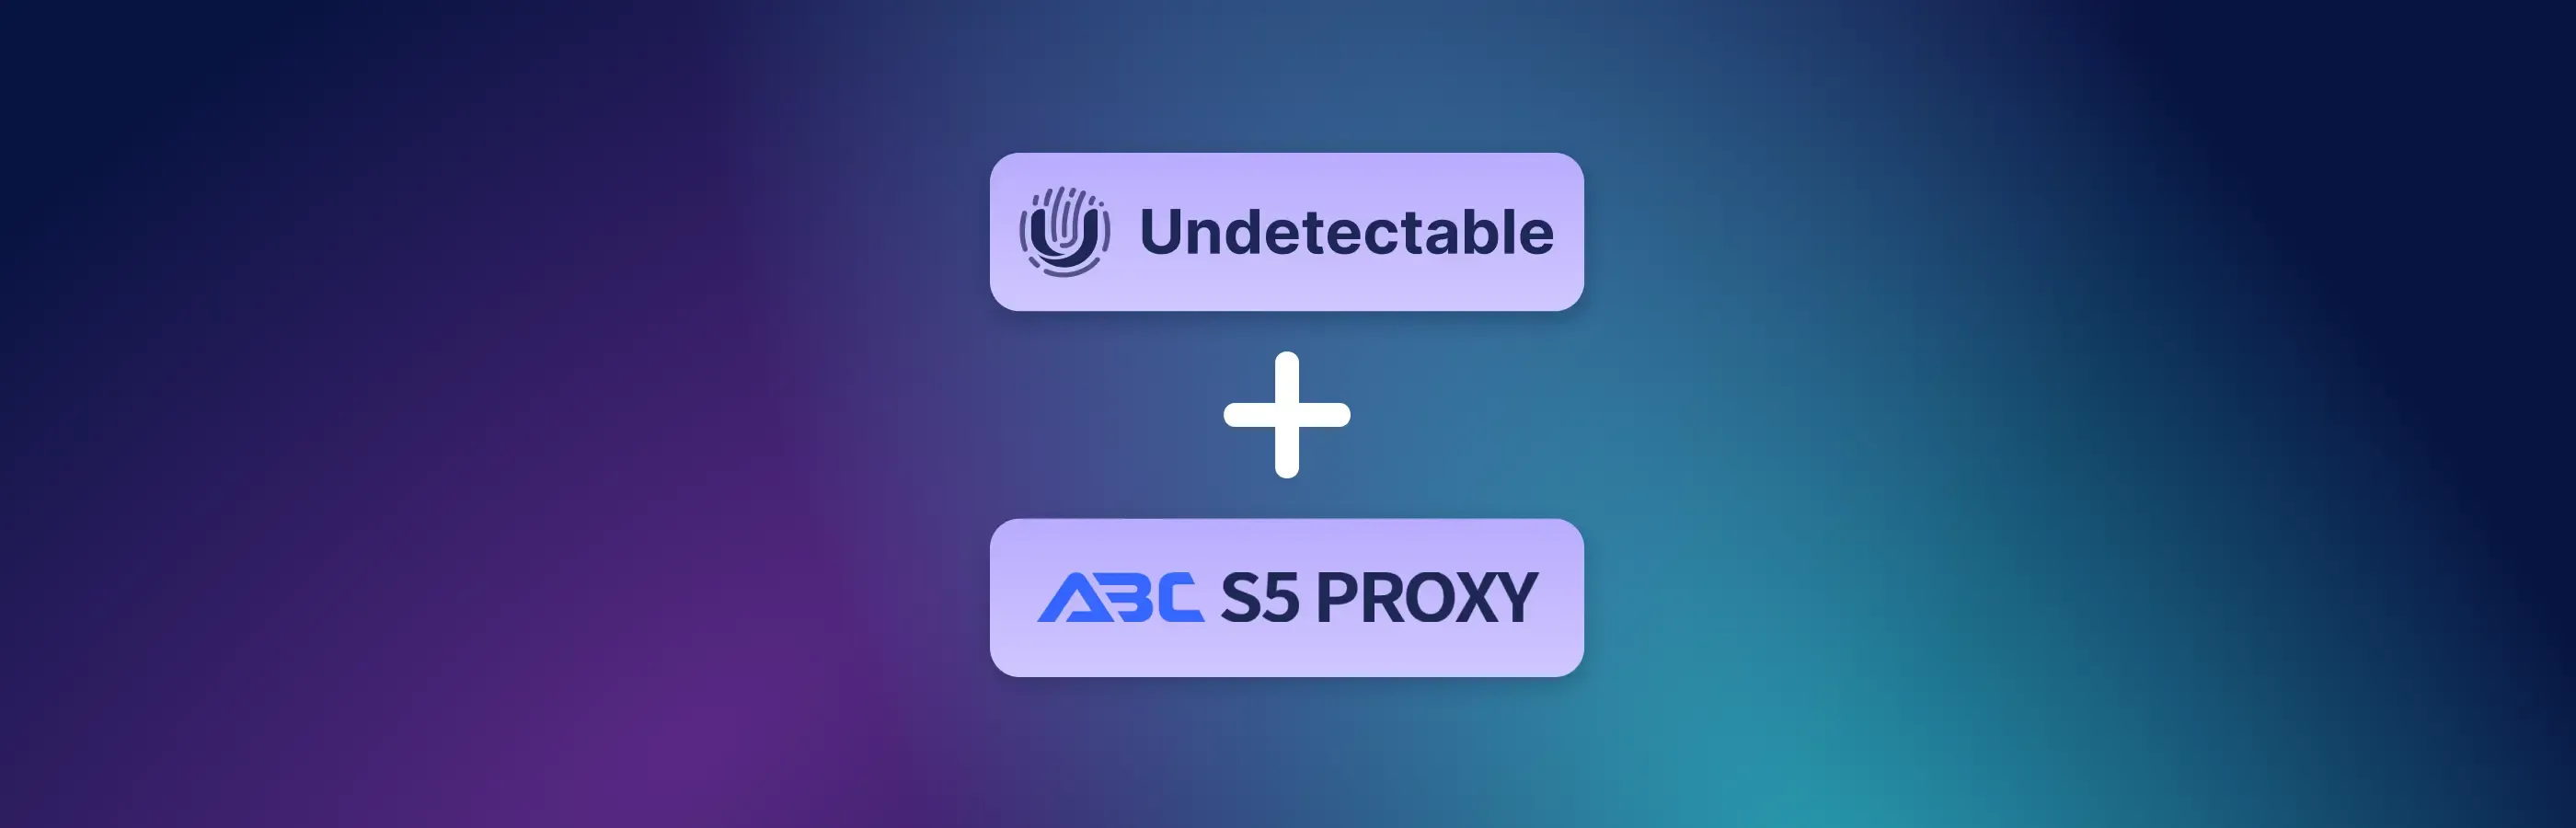 Instructions pour connecter ABCProxy à Undetectable